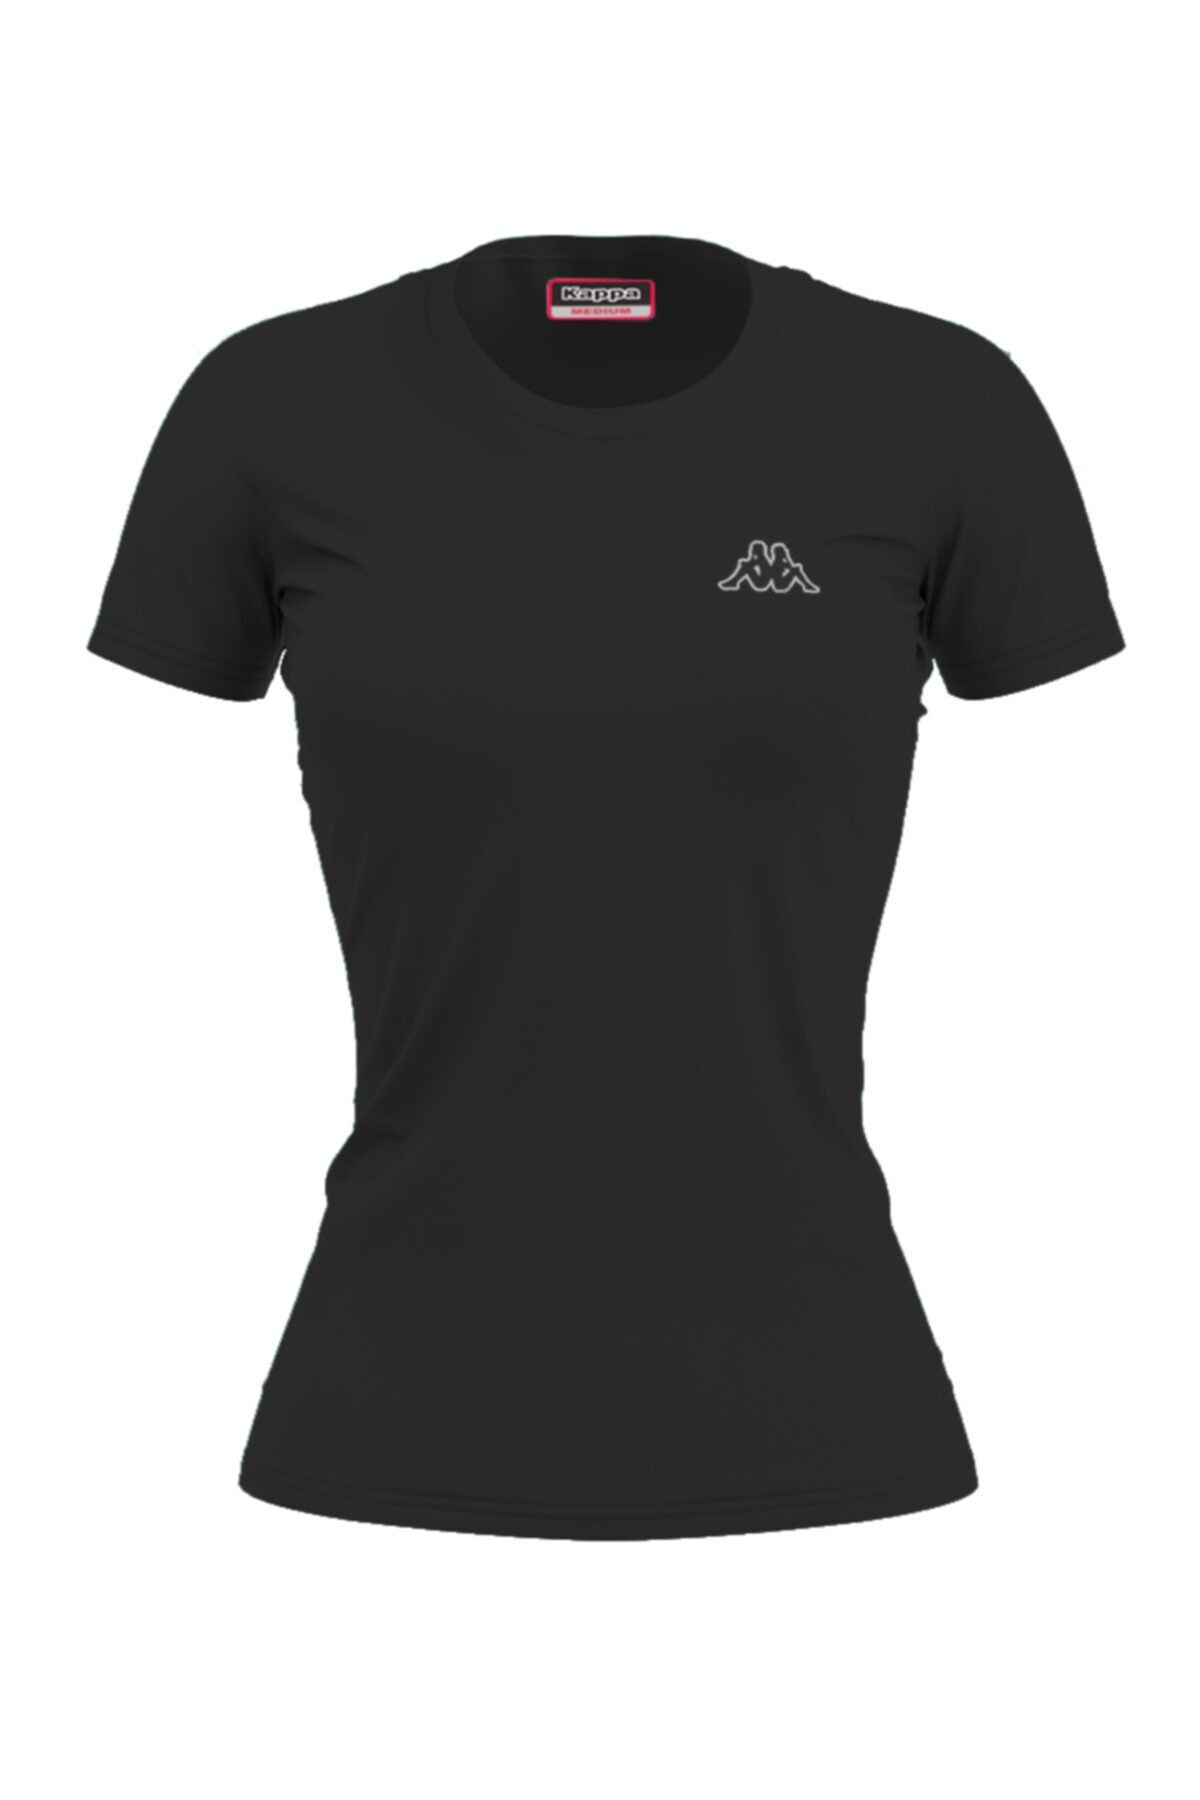 Kappa Kadın T-shirt - 130014B0005